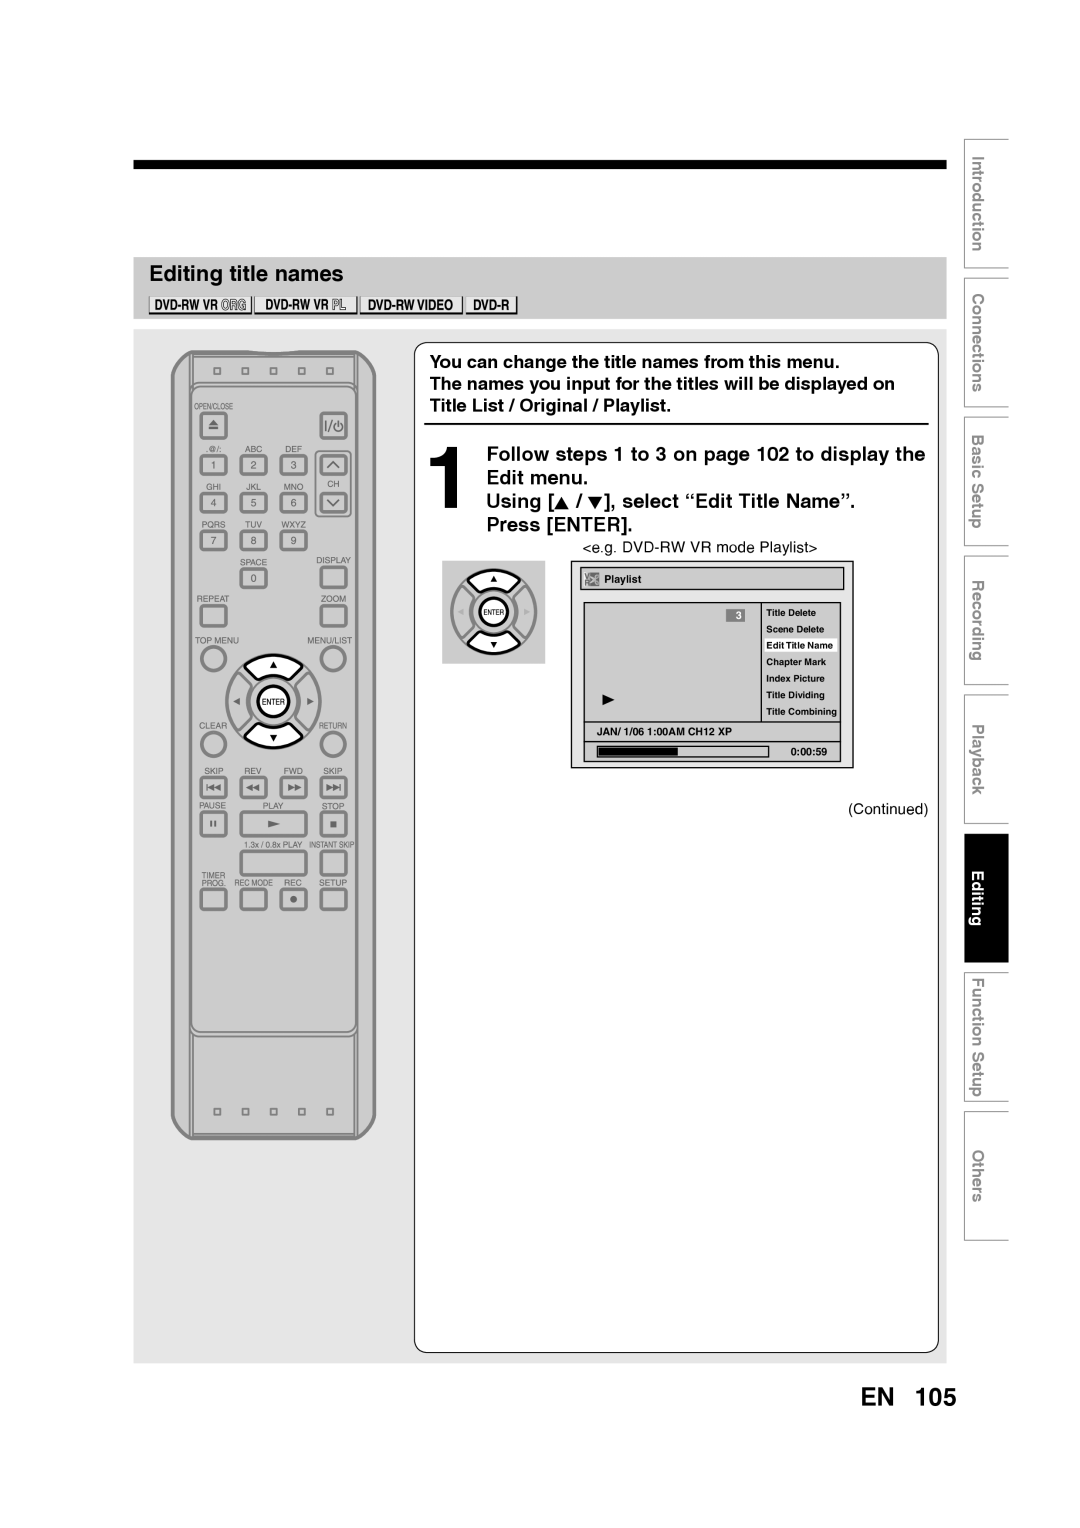 Toshiba D-RW2SU/D-RW2SC Editing title names, Follow steps 1 to 3 on page 102 to display the Edit menu, Playlist, 00059 